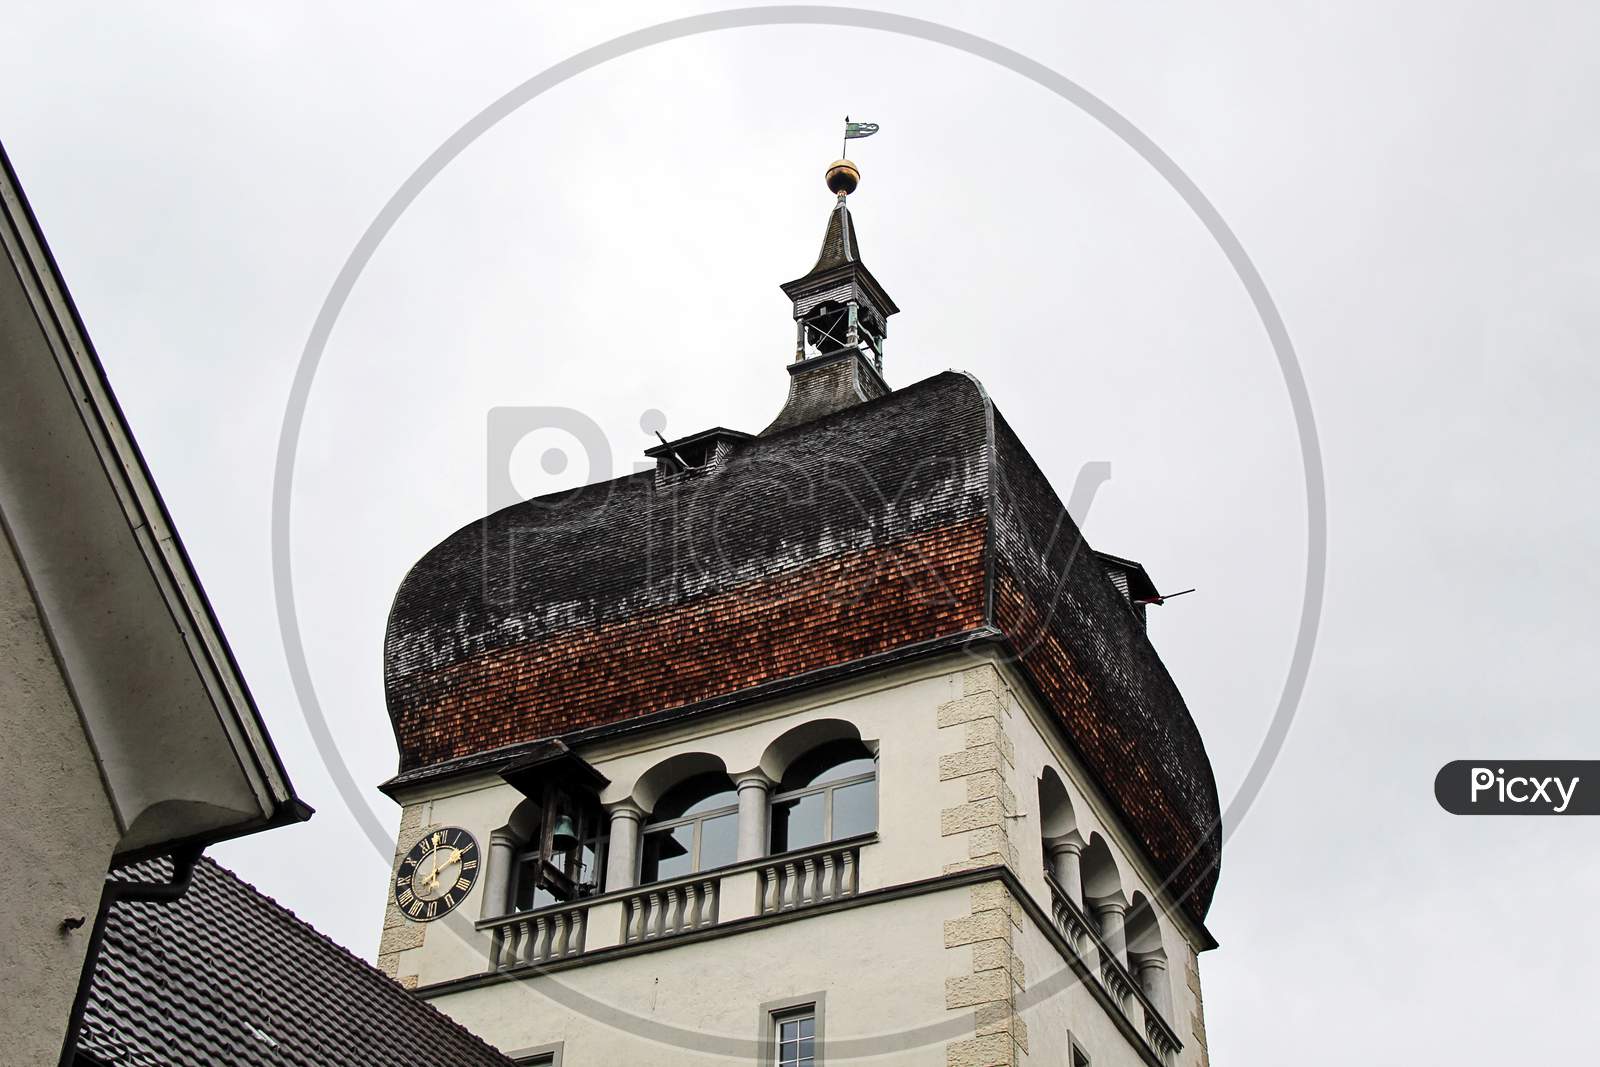 Martinsturm (Tower Of St. Martin), Bregenz